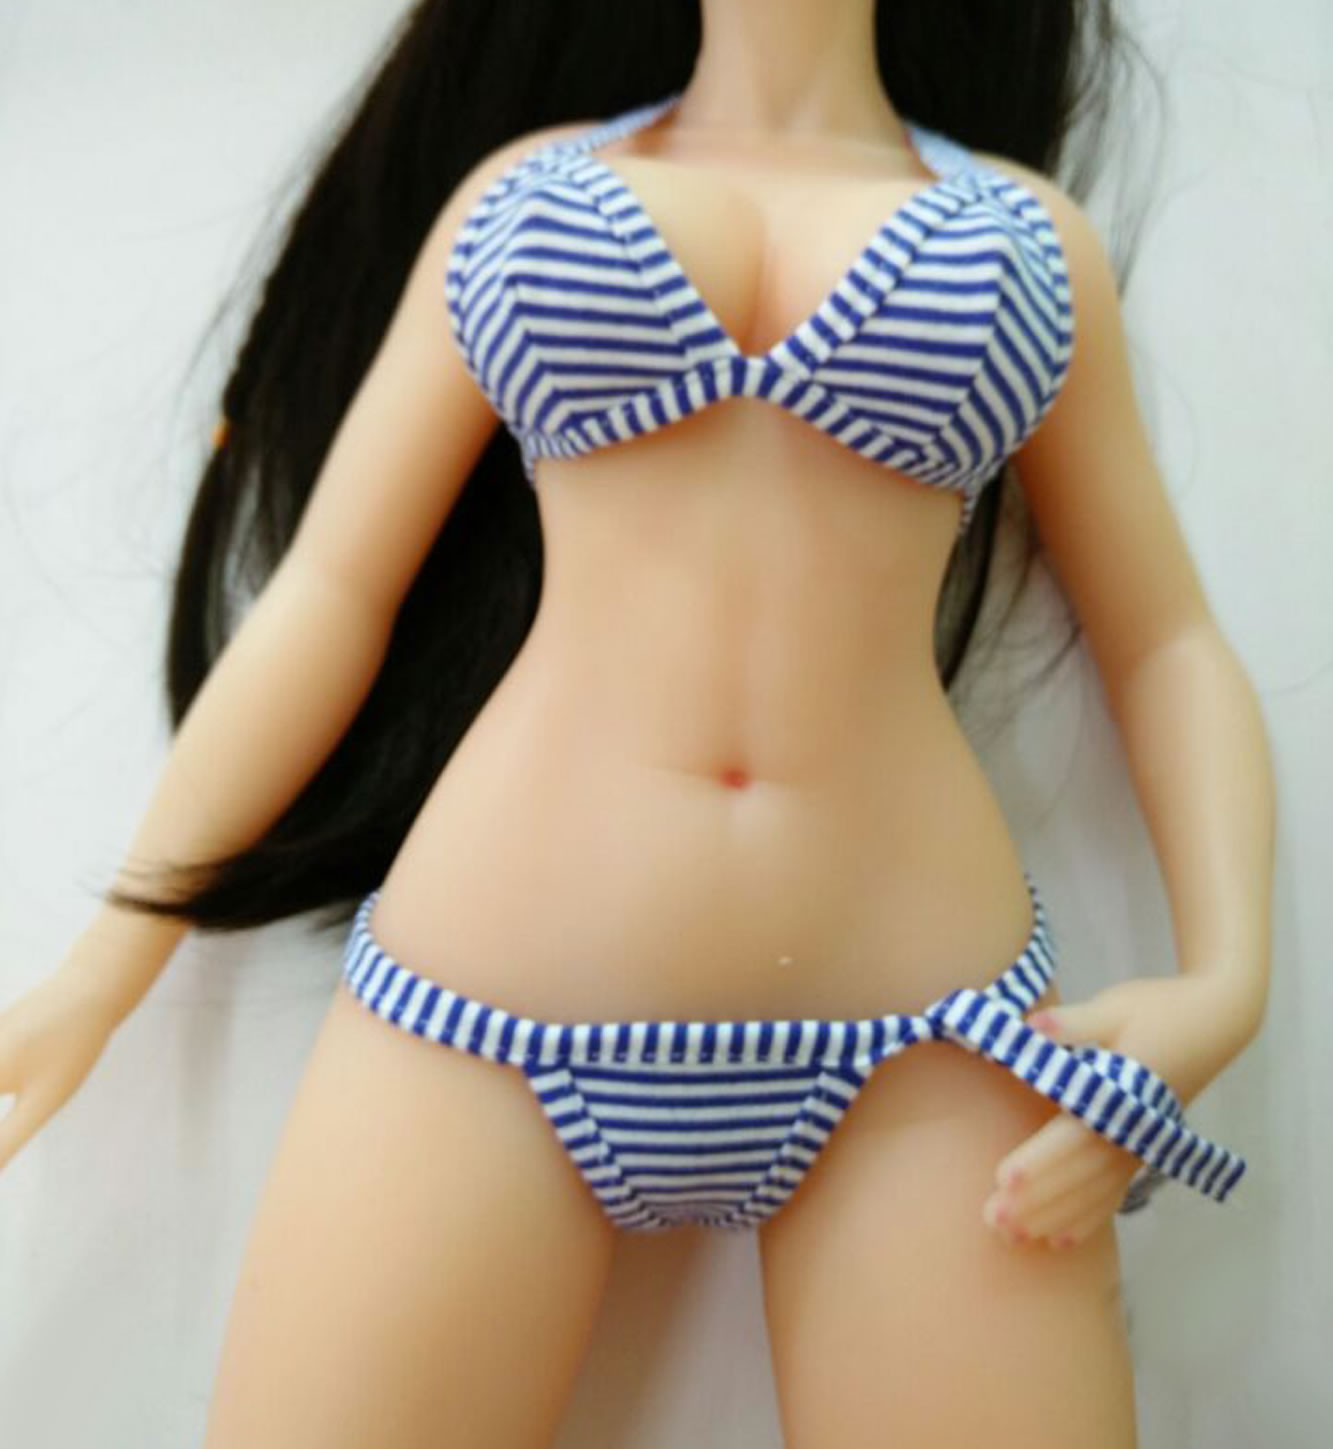 65 cm sex doll